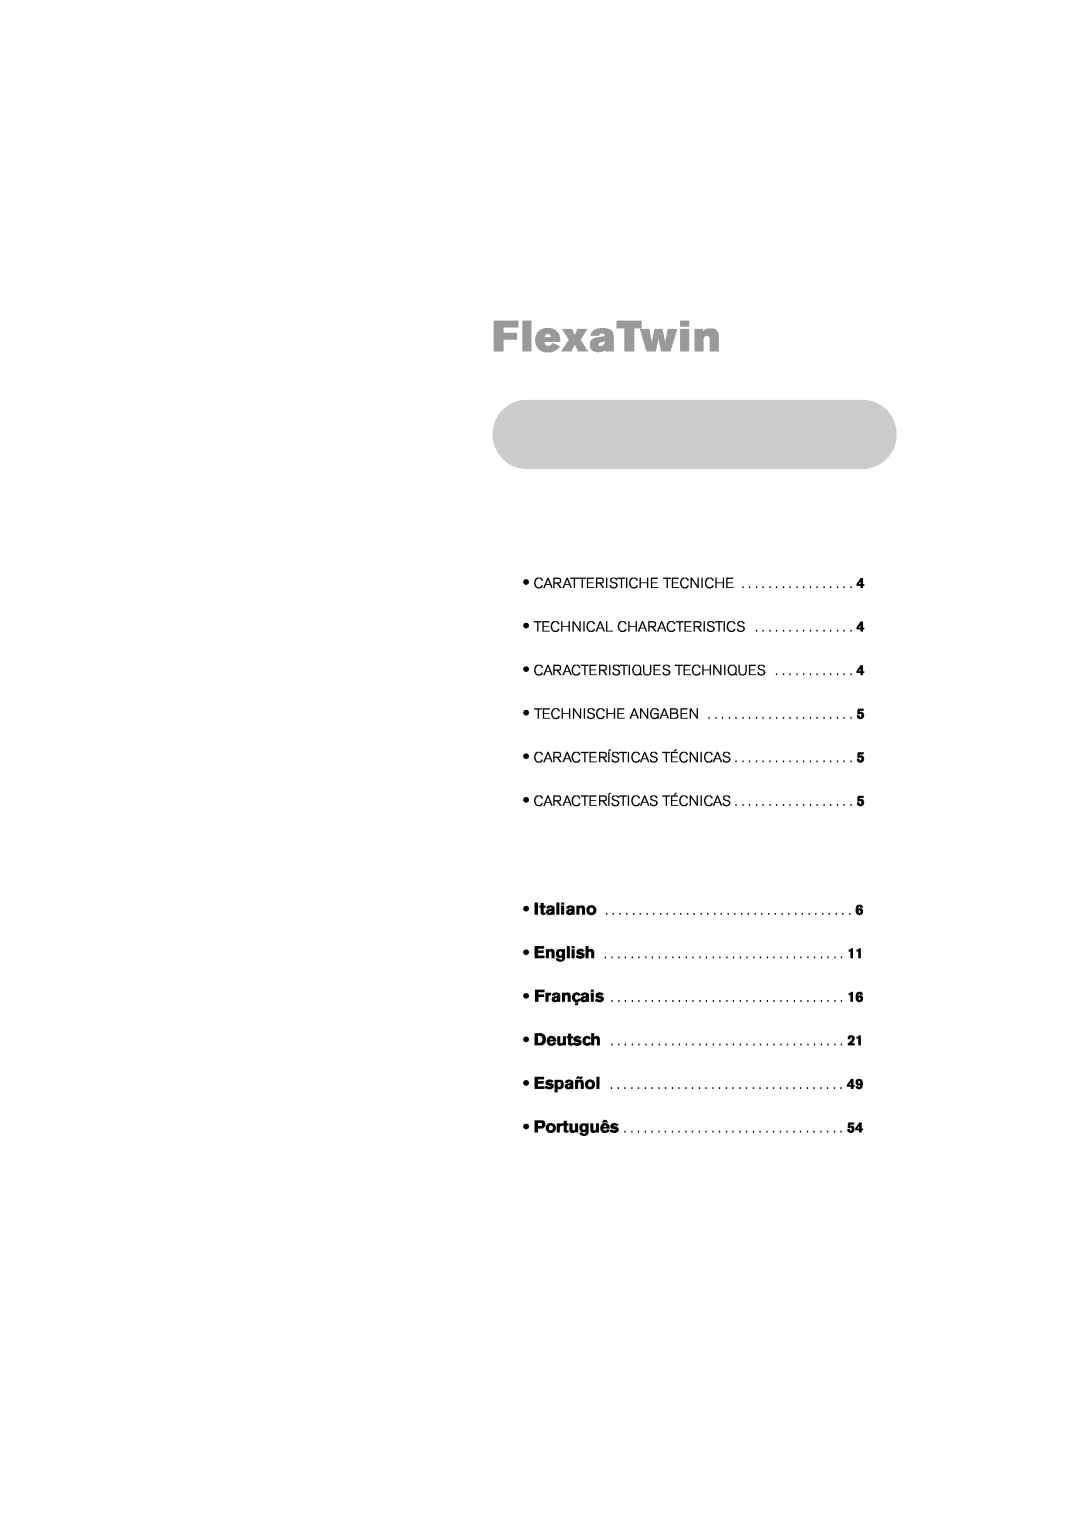 Jacuzzi ELT 10 FlexaTwin, Caratteristiche Tecniche Technical Characteristics, Français Deutsch Español Português 